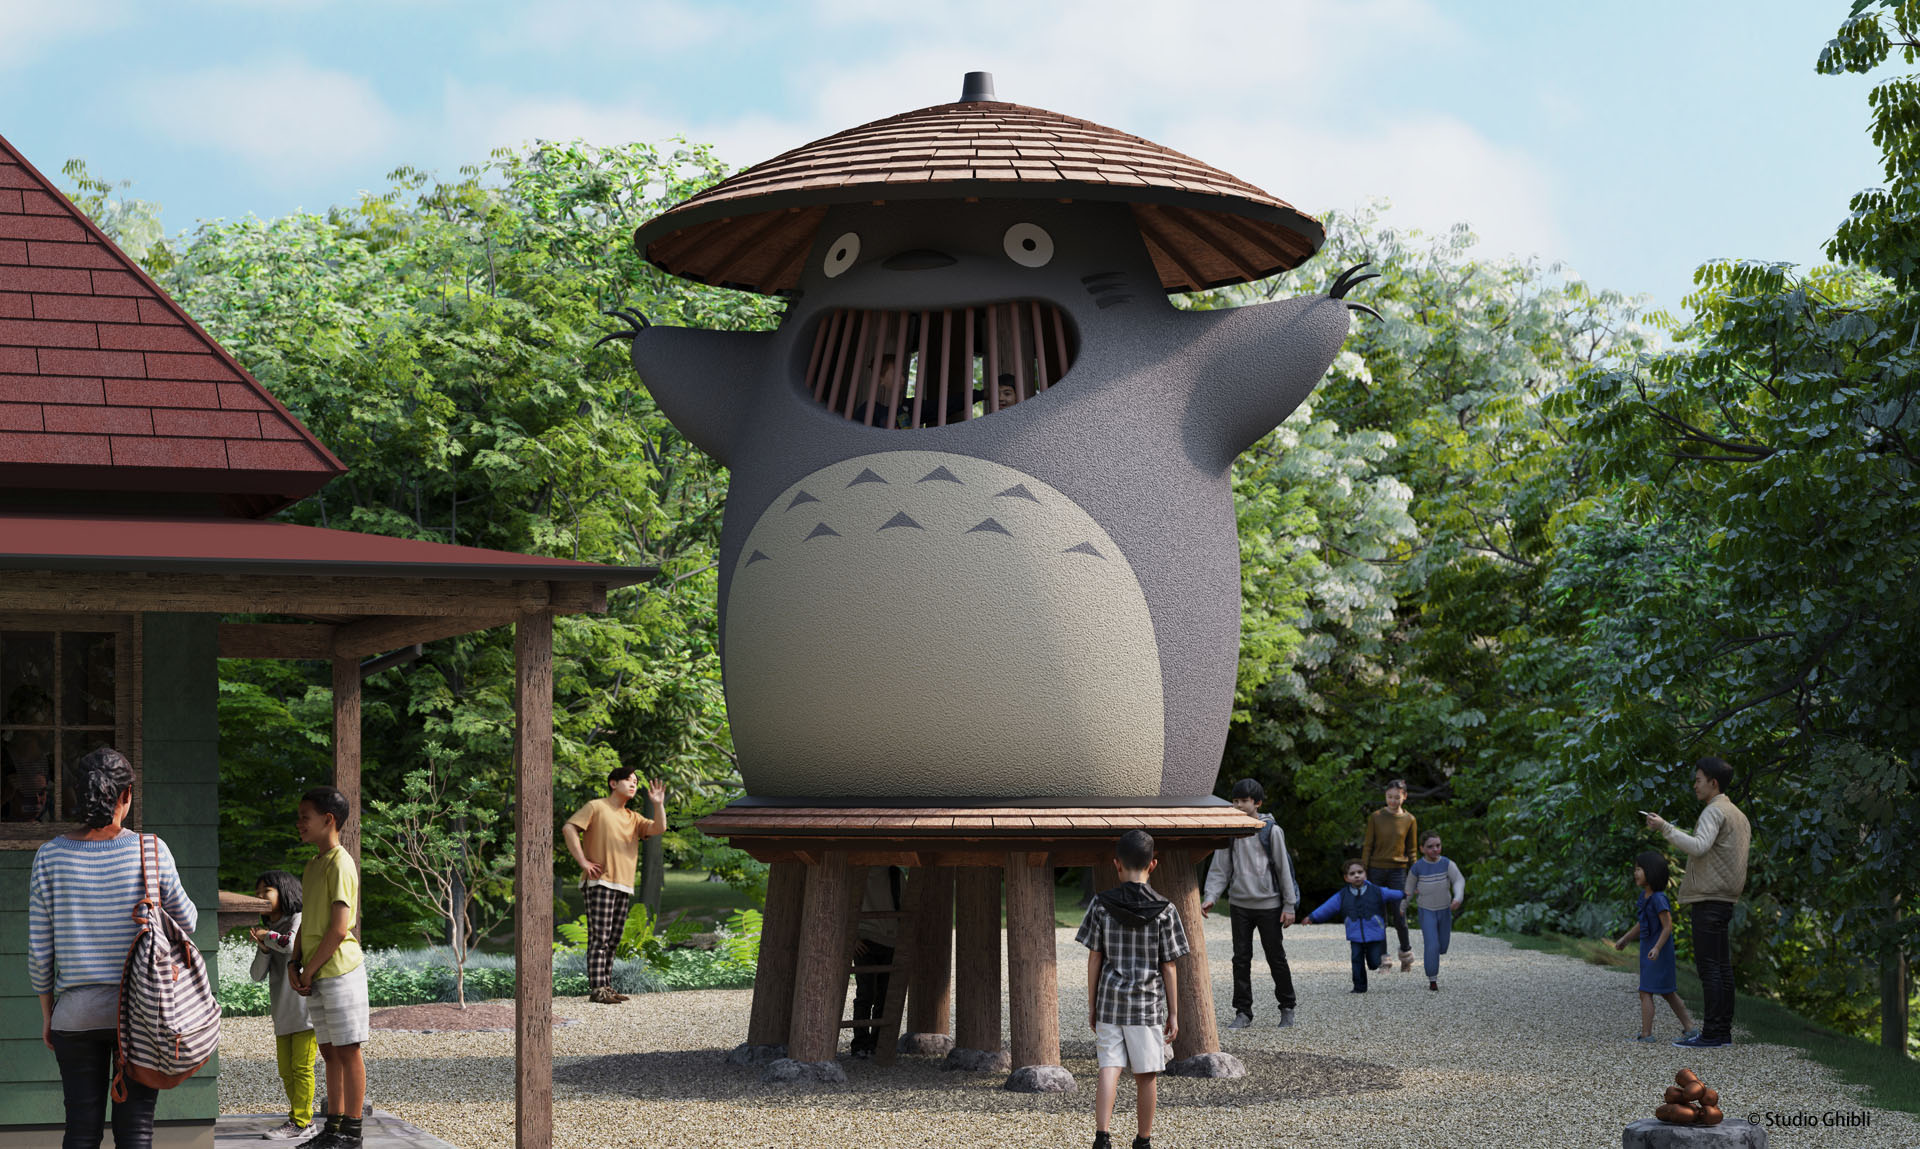 Japan's Studio Ghibli